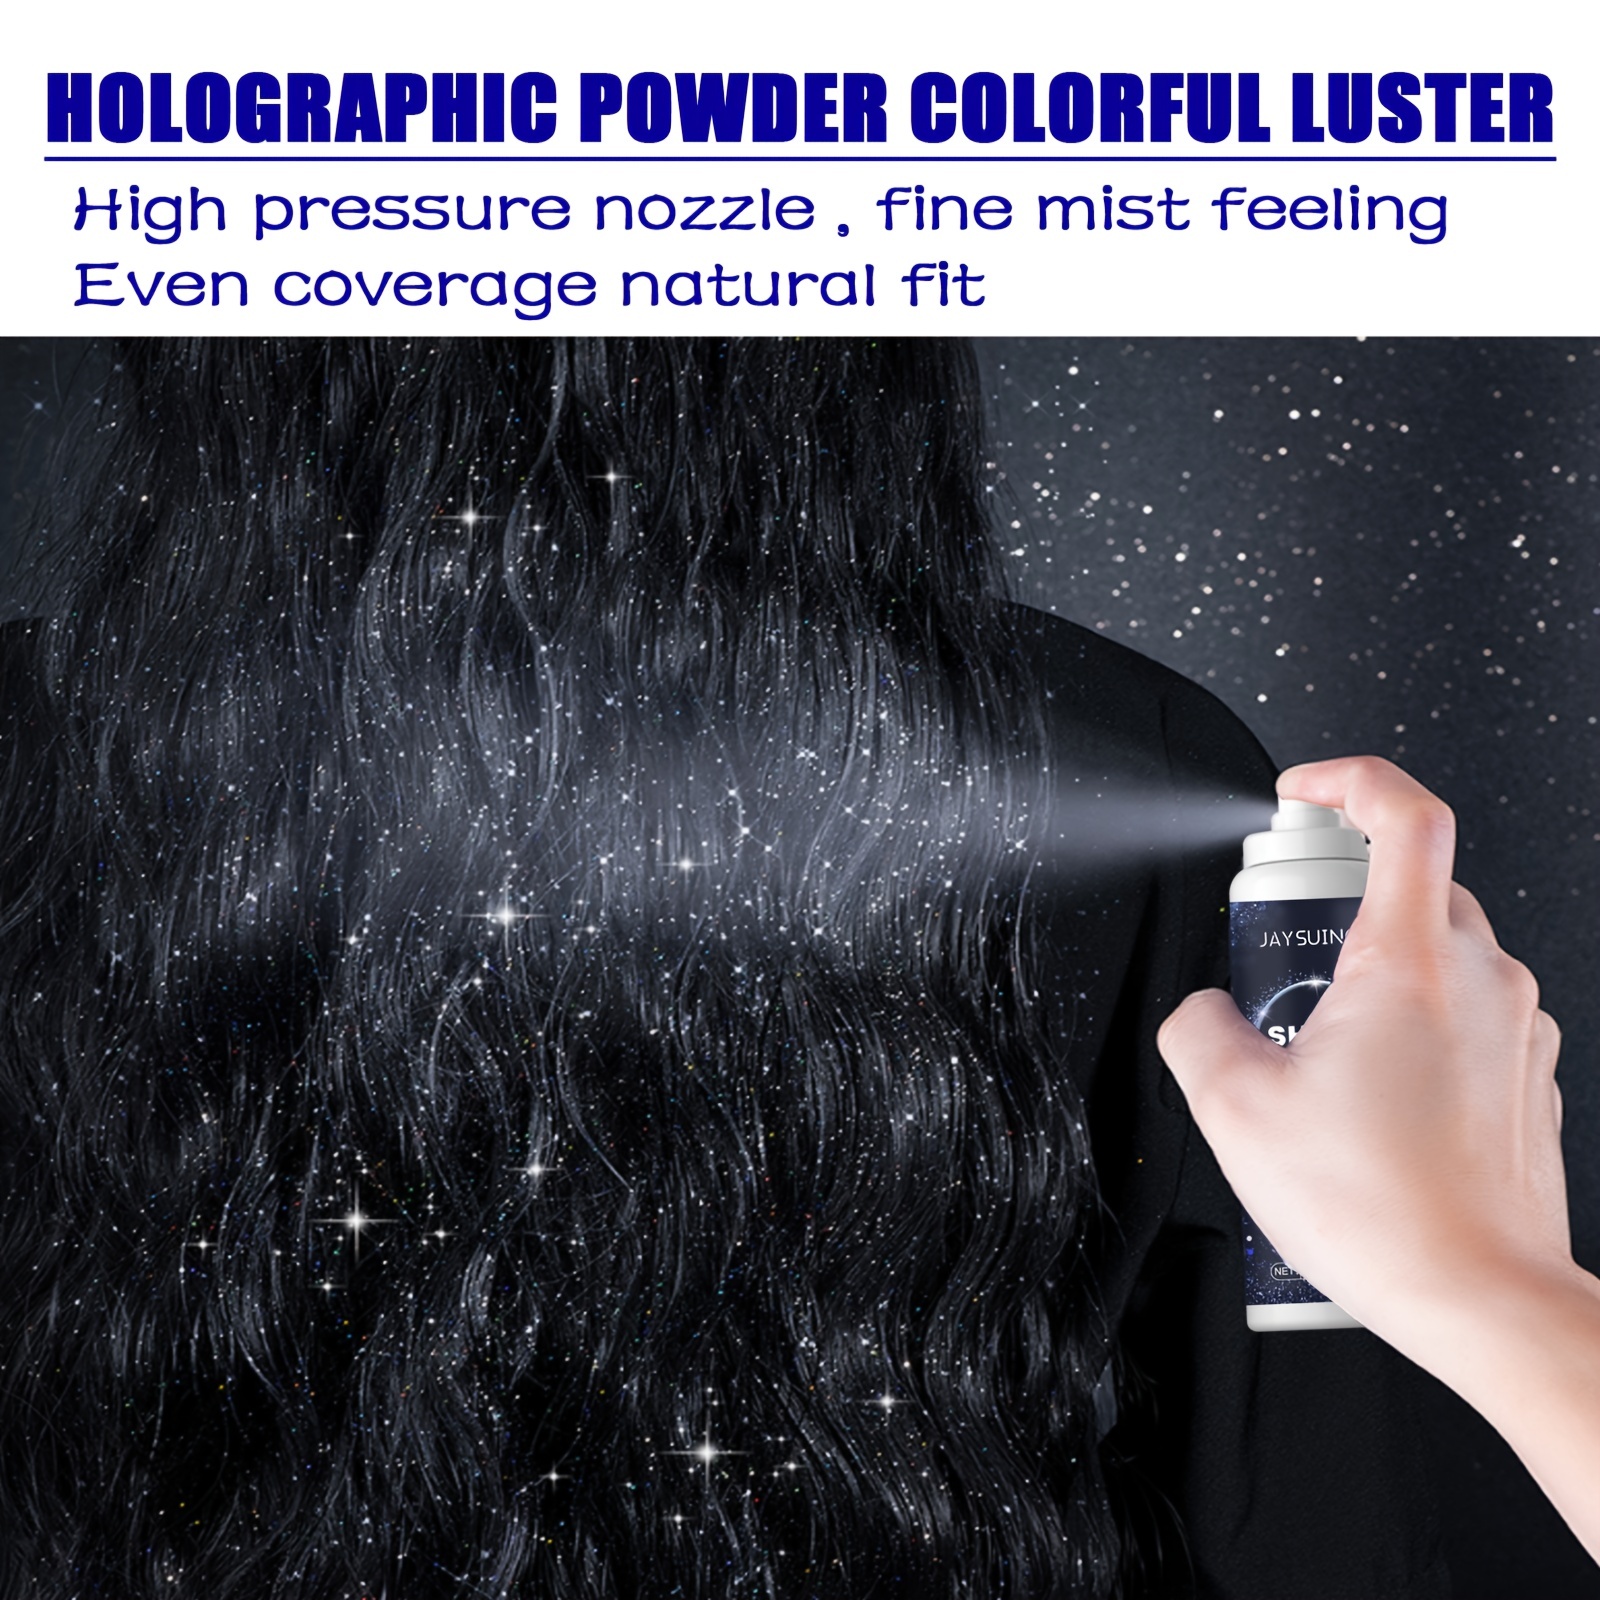 Body Brightening Glitter Spray, Parties Glitter Spray, Sparkle Spray For  Hair & Clothes And Body, 2.03Fluid Ounce